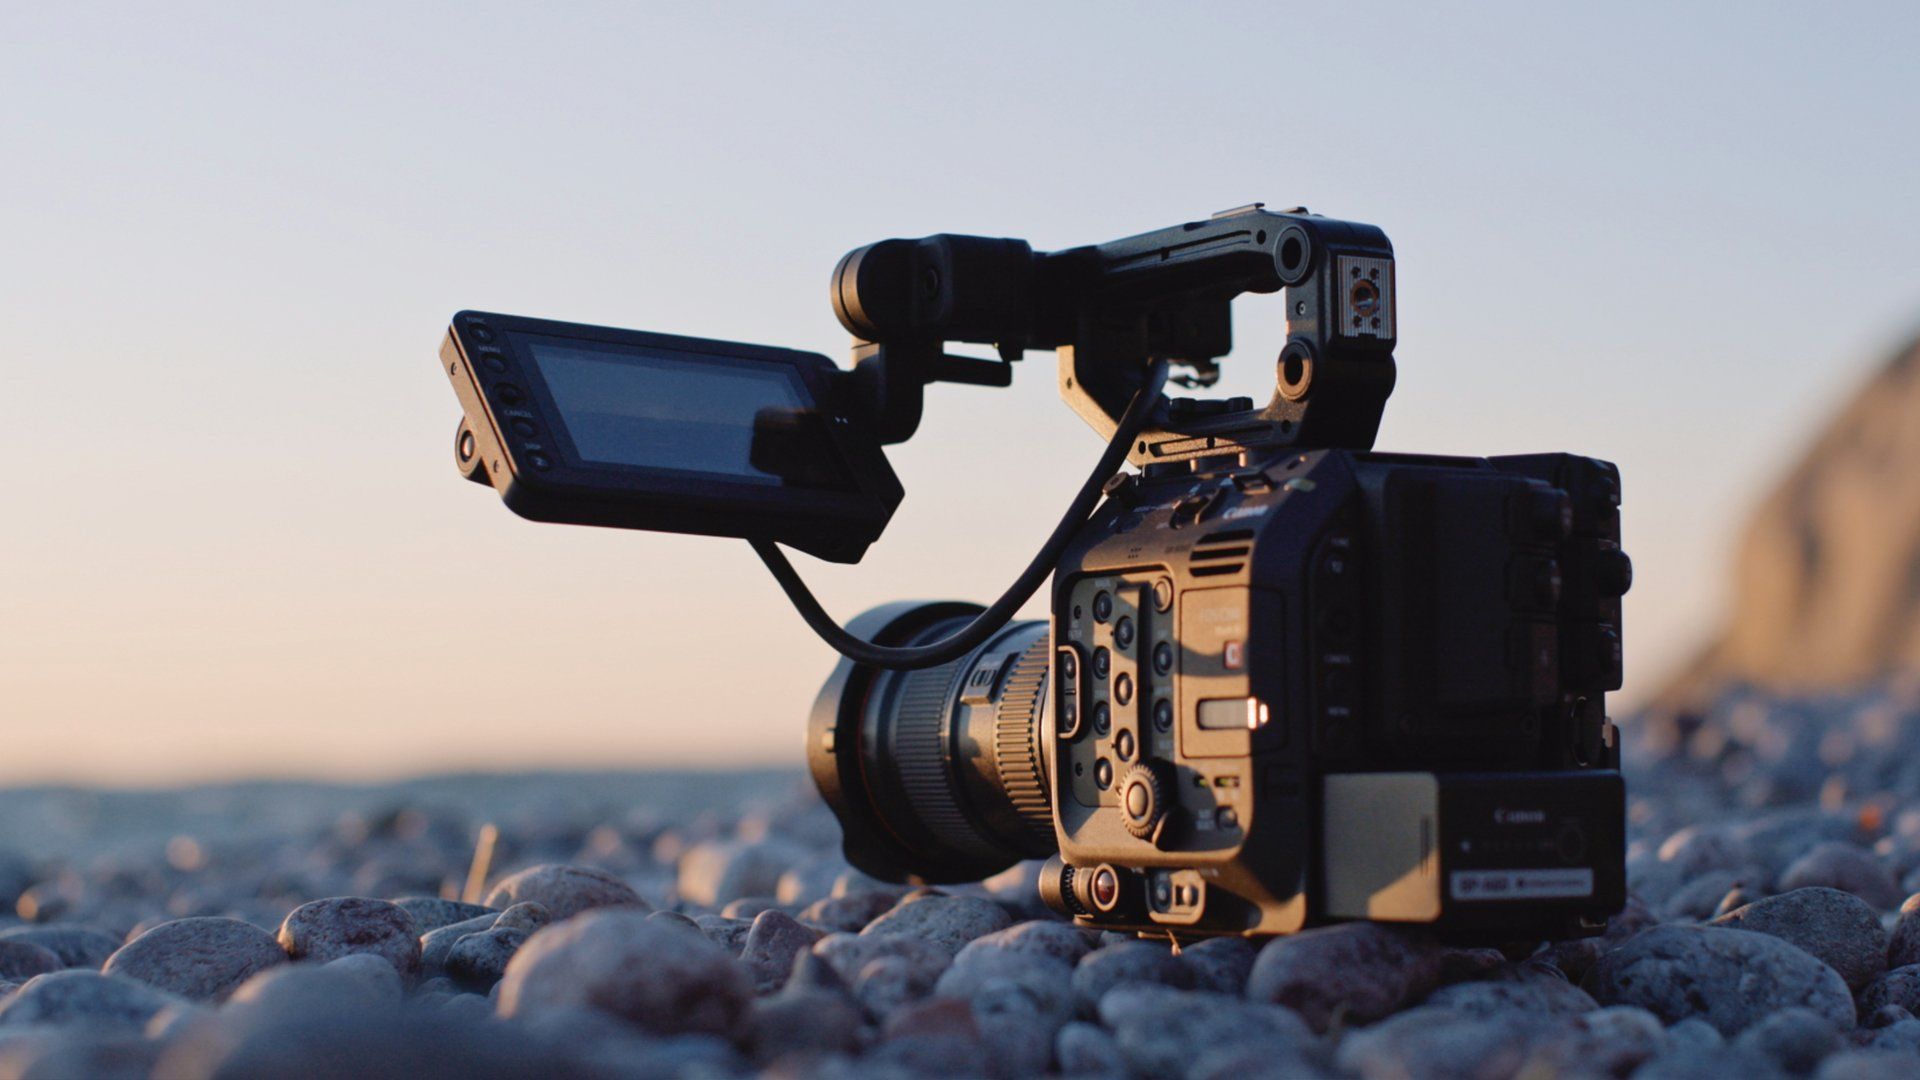 Canon Cinema EOS C300 Mark III on rocks